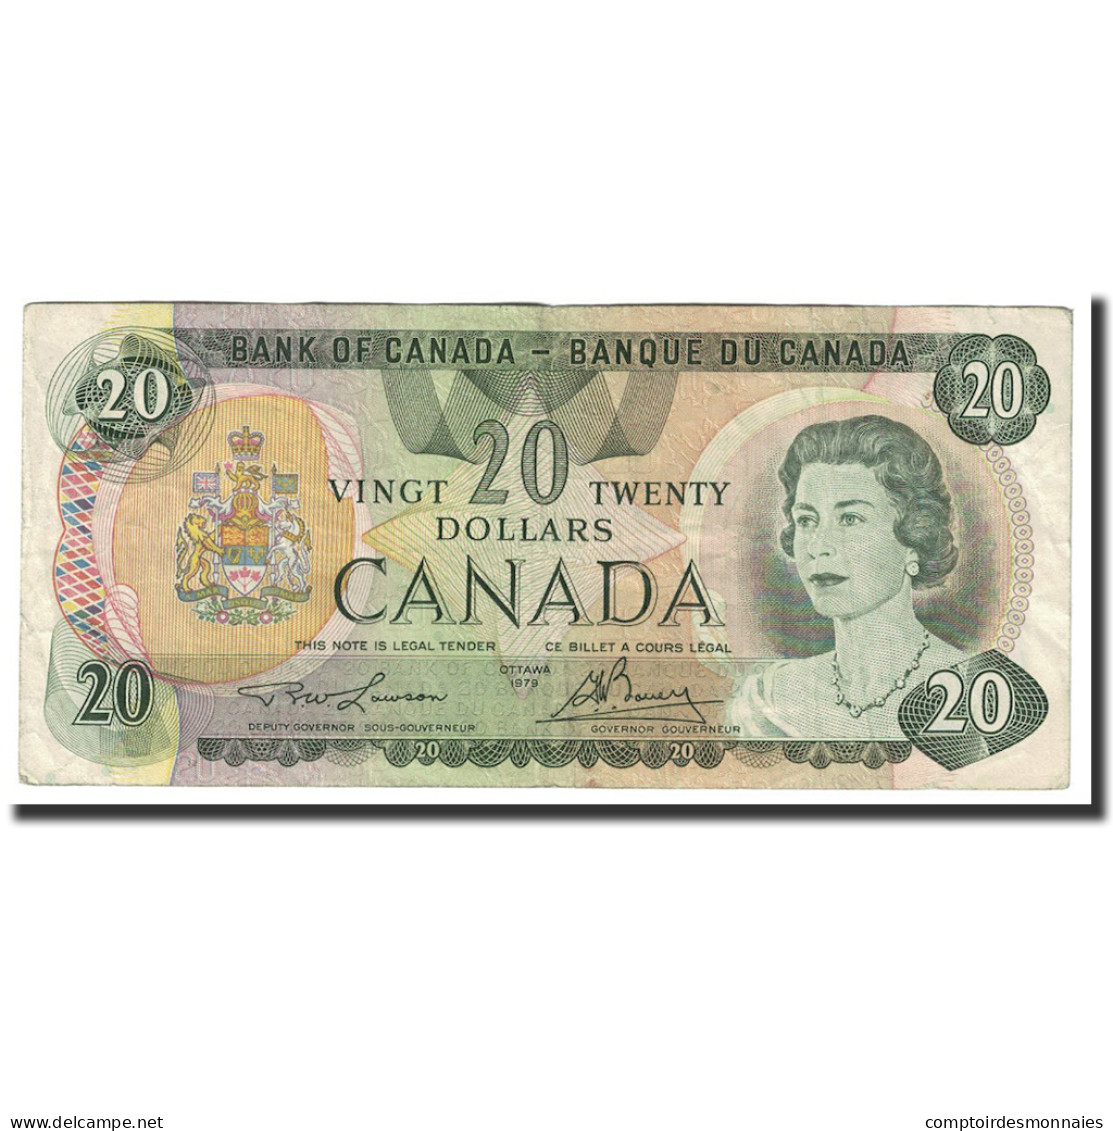 Billet, Canada, 20 Dollars, 1979, KM:93a, TTB - Canada